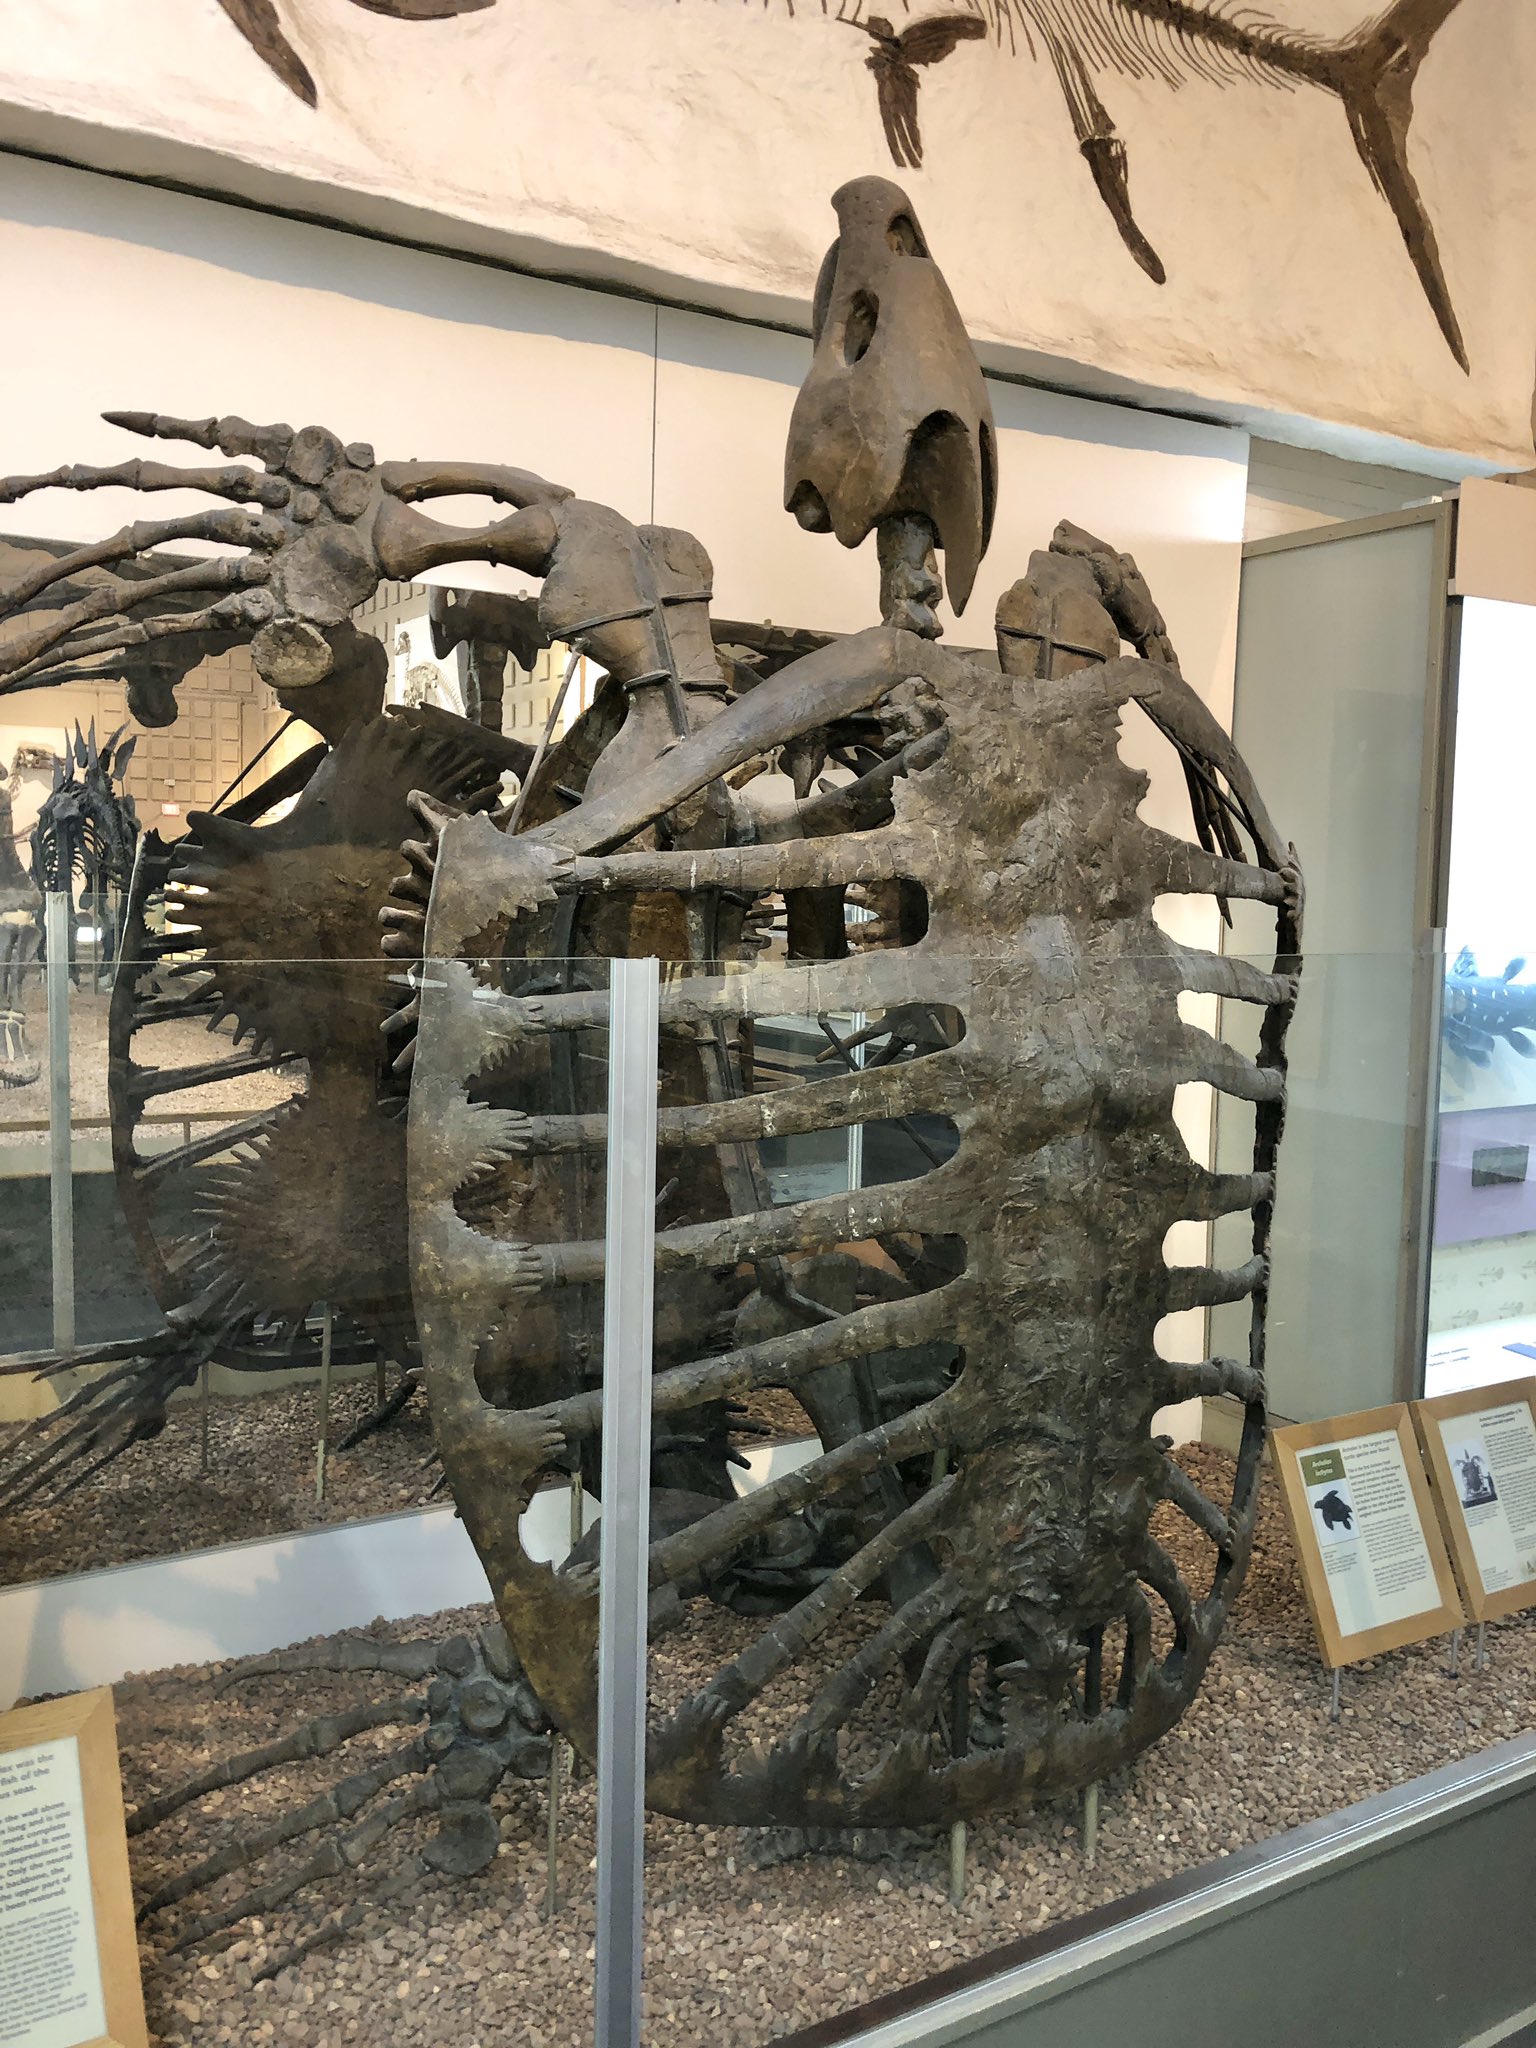 Deinonychus  Yale Peabody Museum